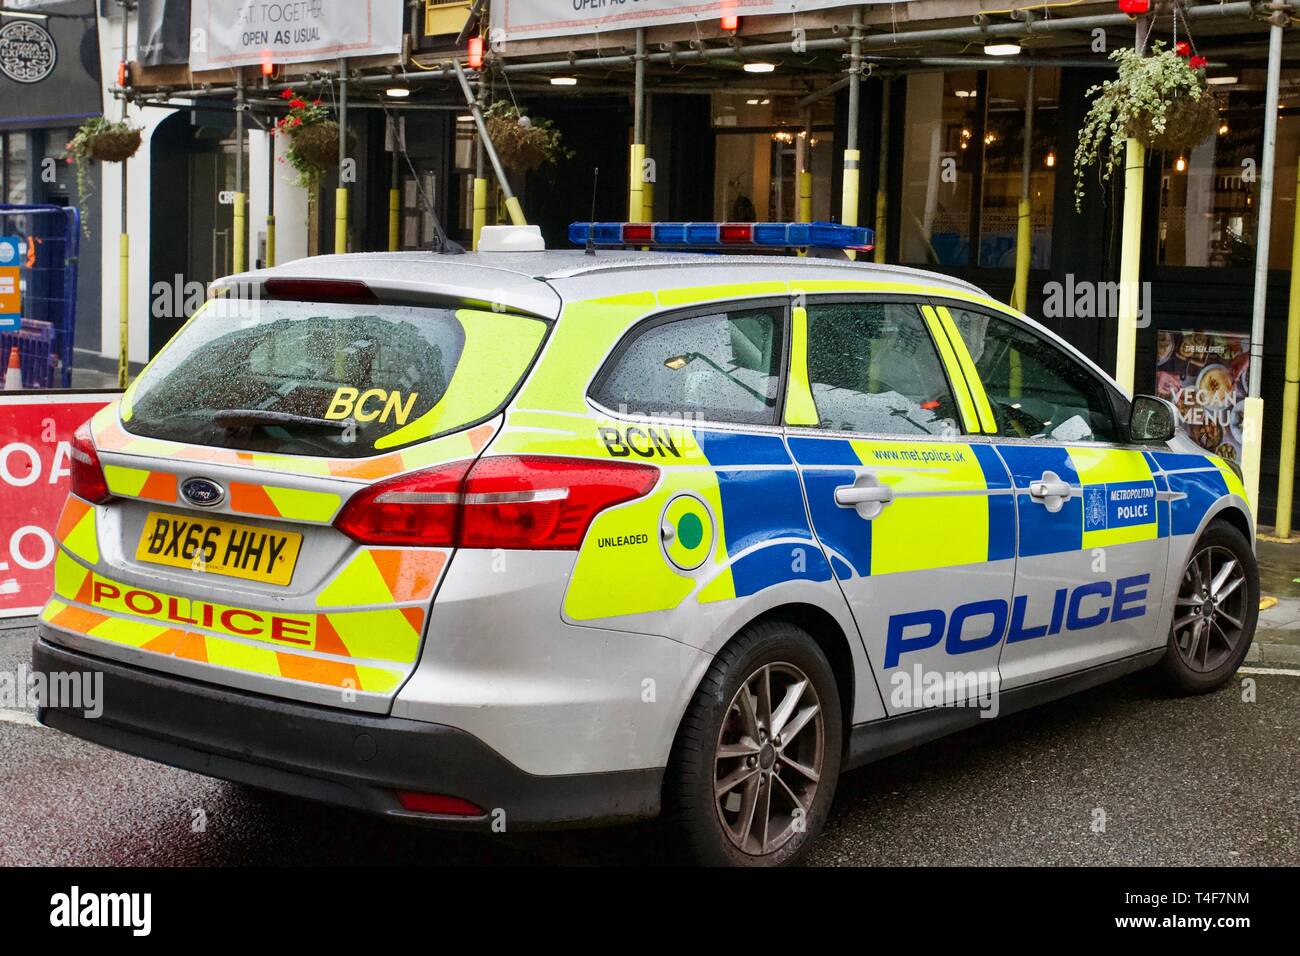 Voiture de police, Covent Garden, Londres, Angleterre. Banque D'Images